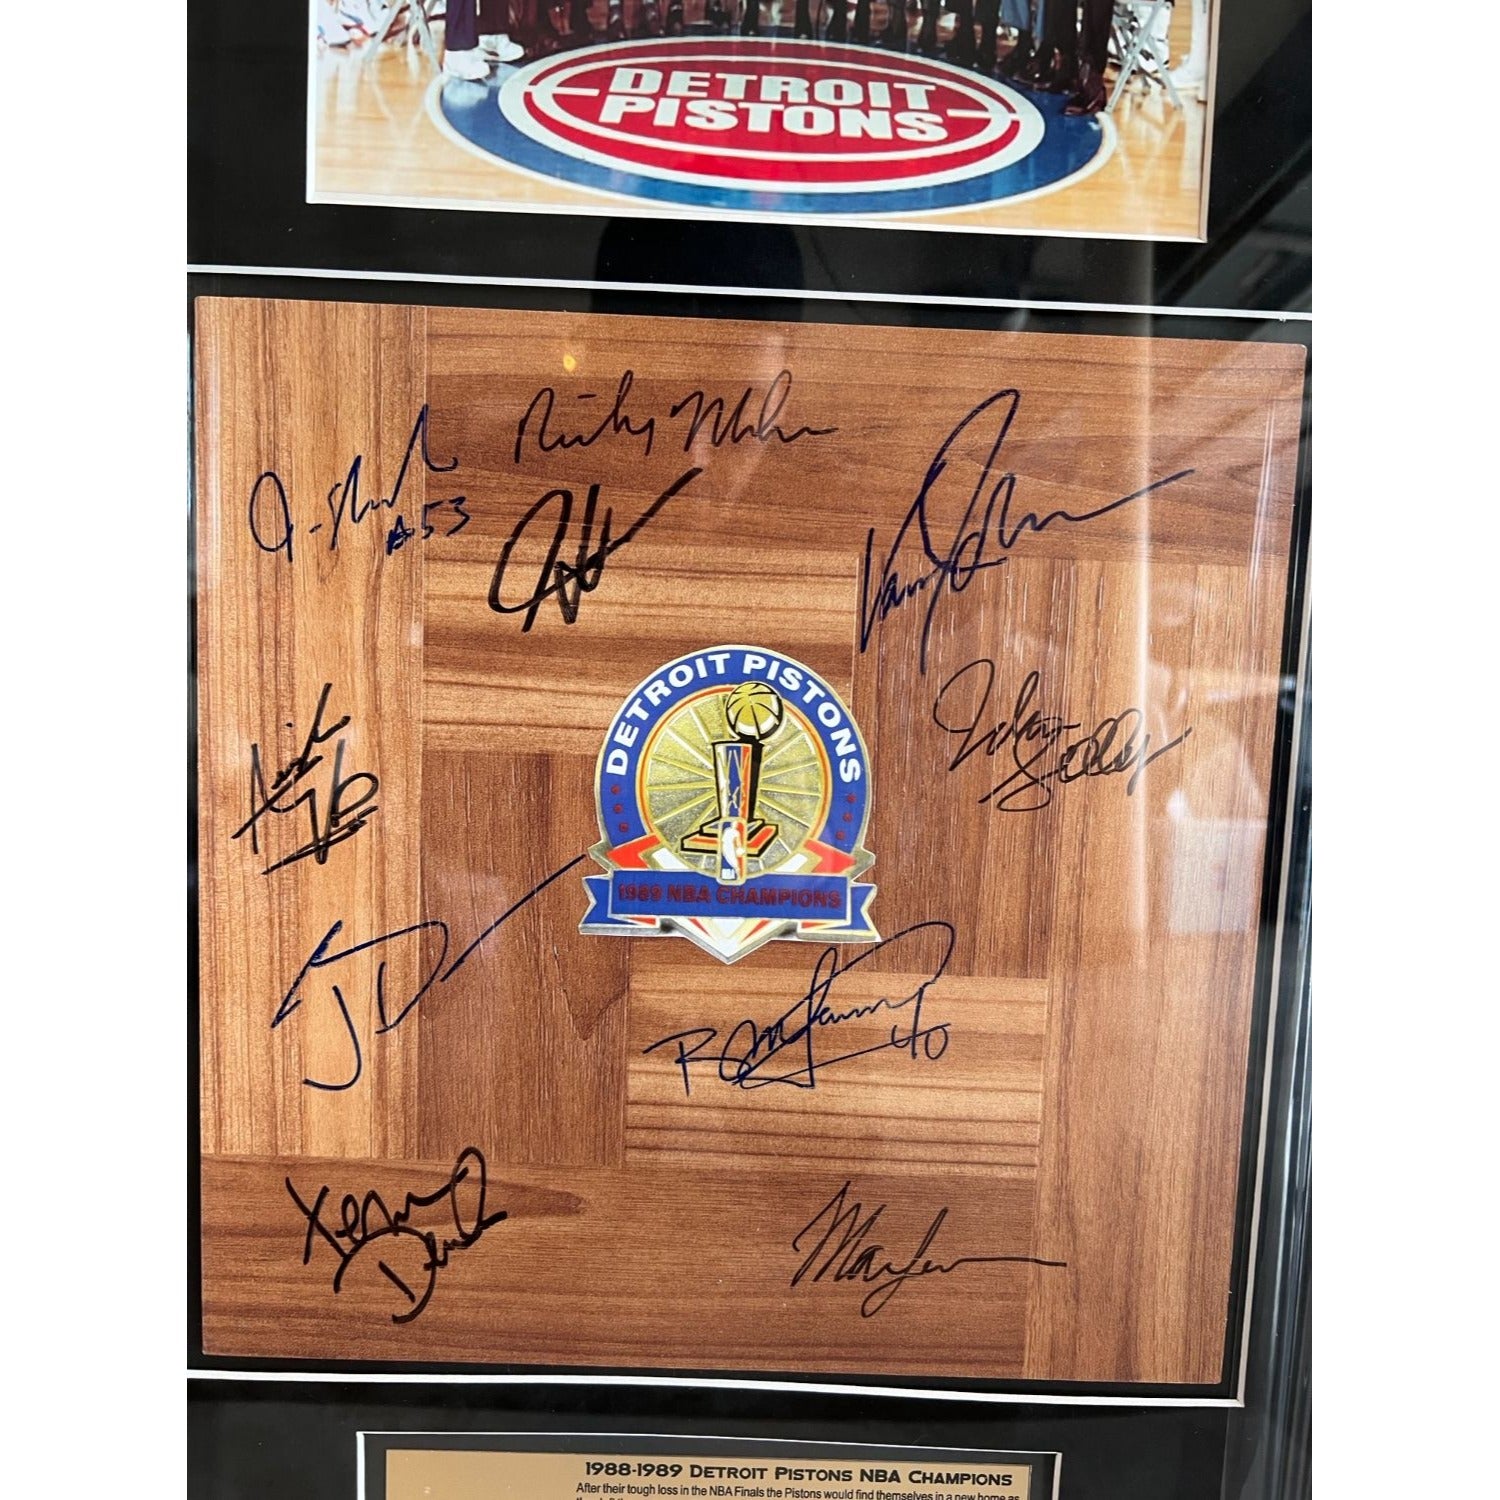 Isaiah Thomas Joe Dumars Vinnie Johnson 1989 Detroit Pistons NBA champions team signed parquet floorboard signed and framed 32x18